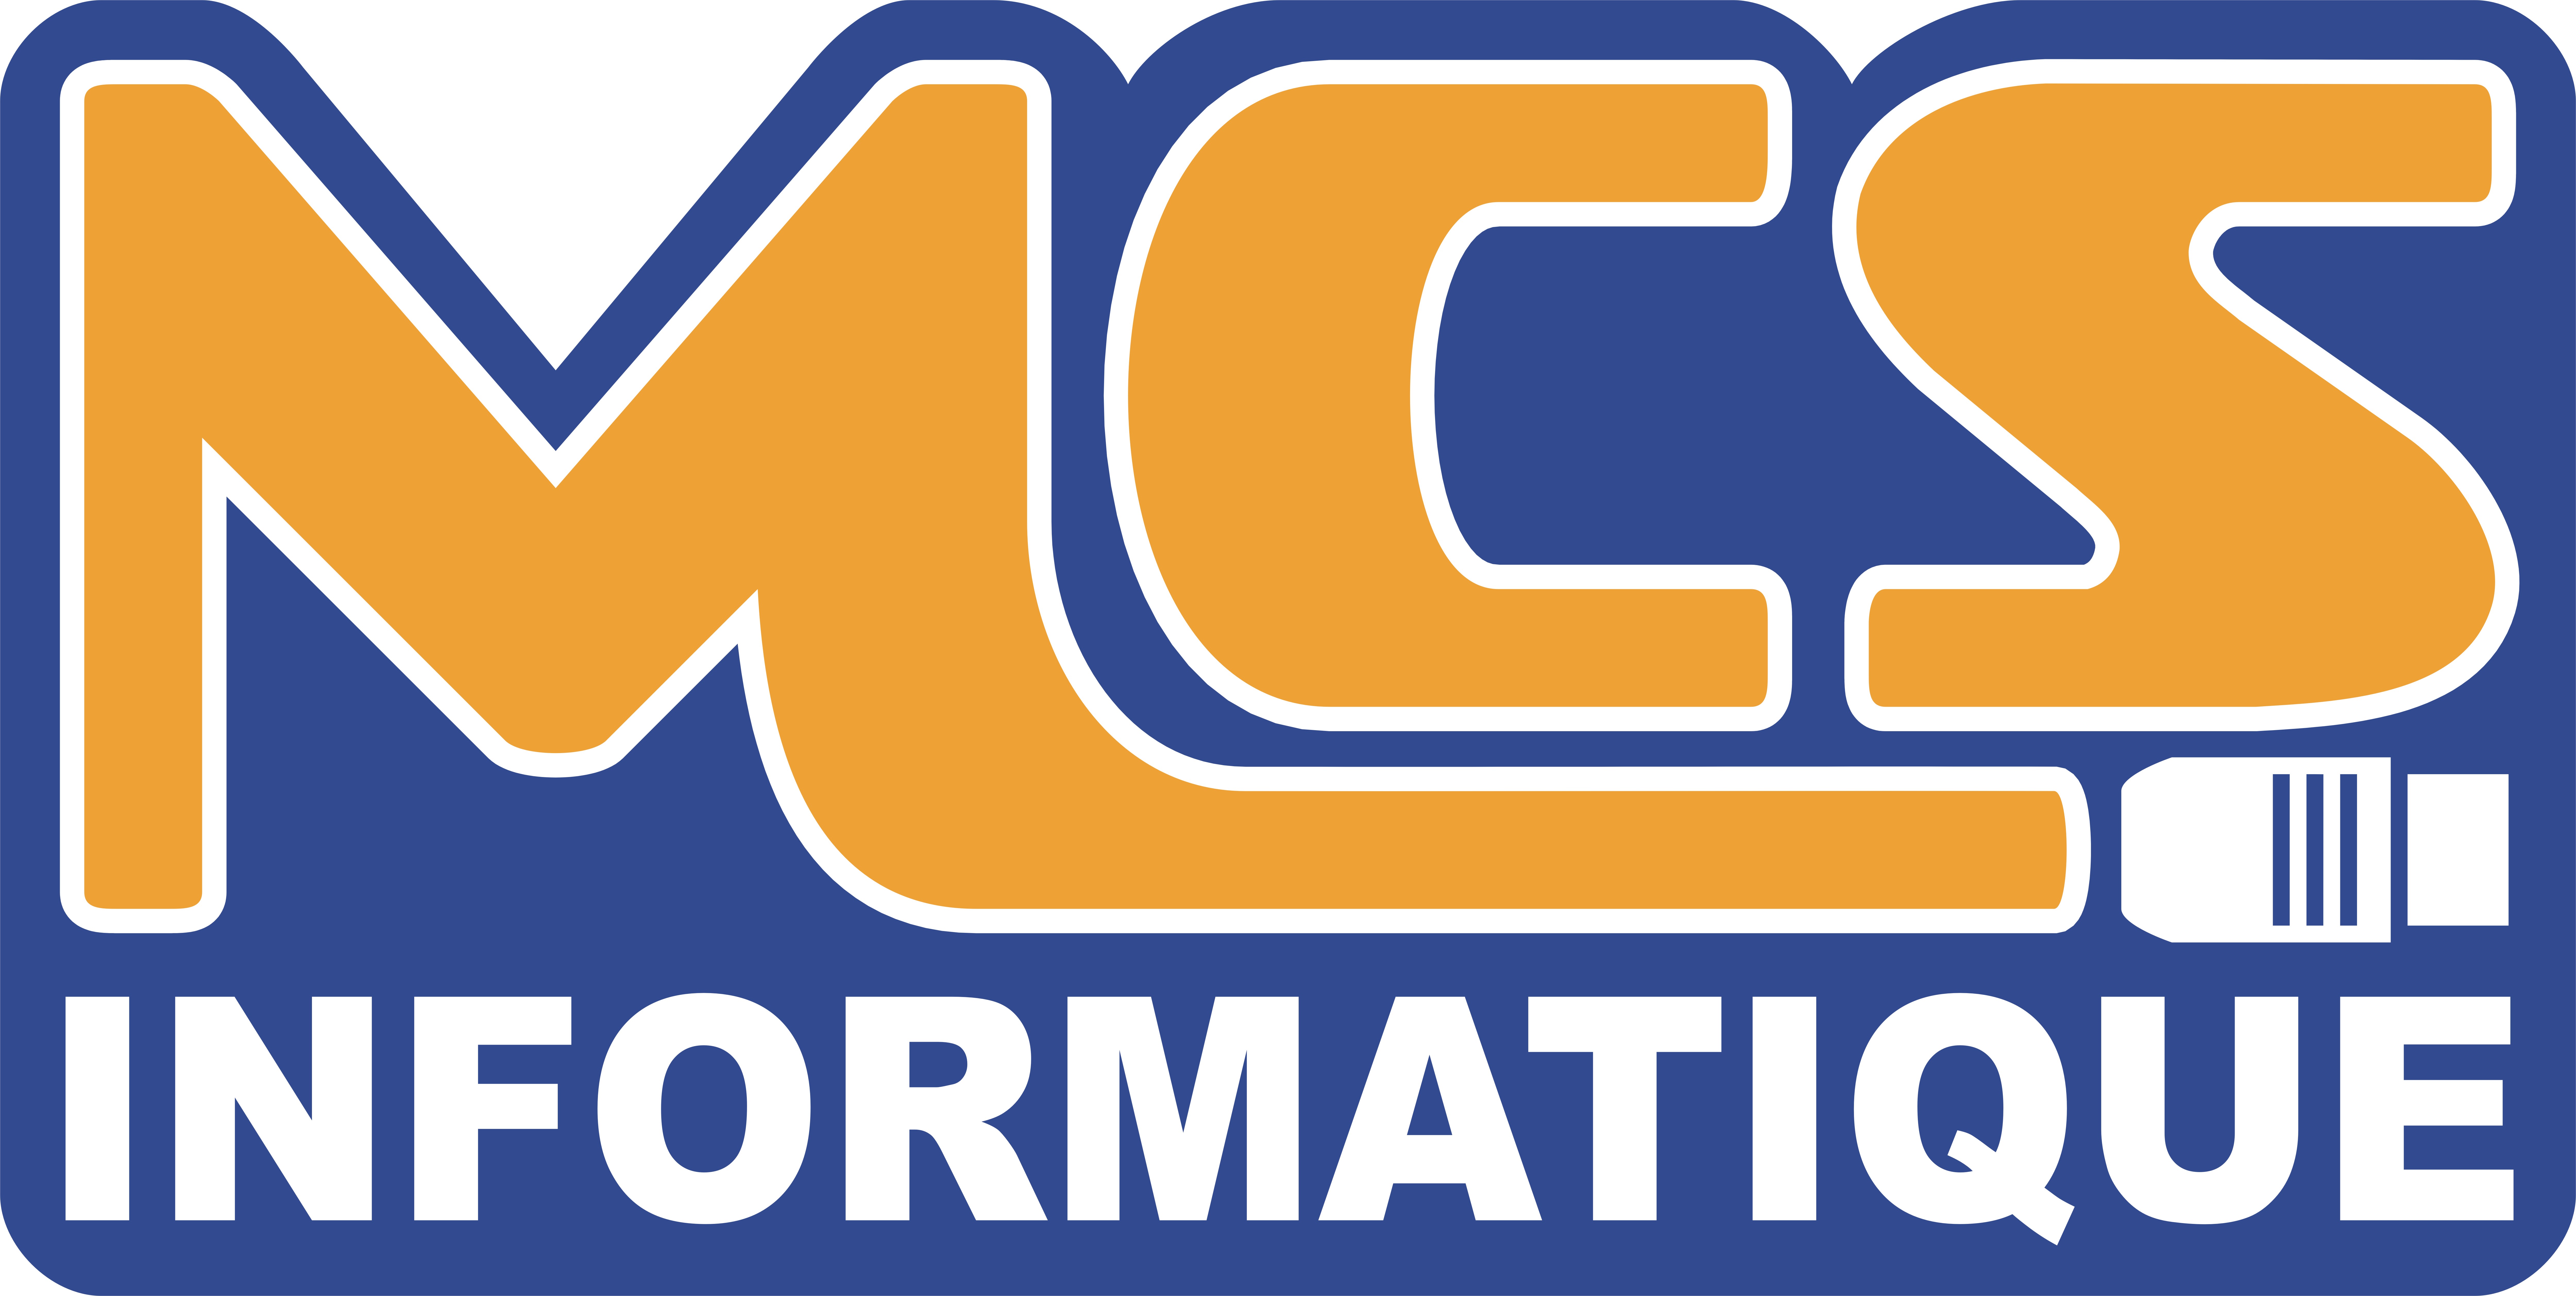 MCS Informatique